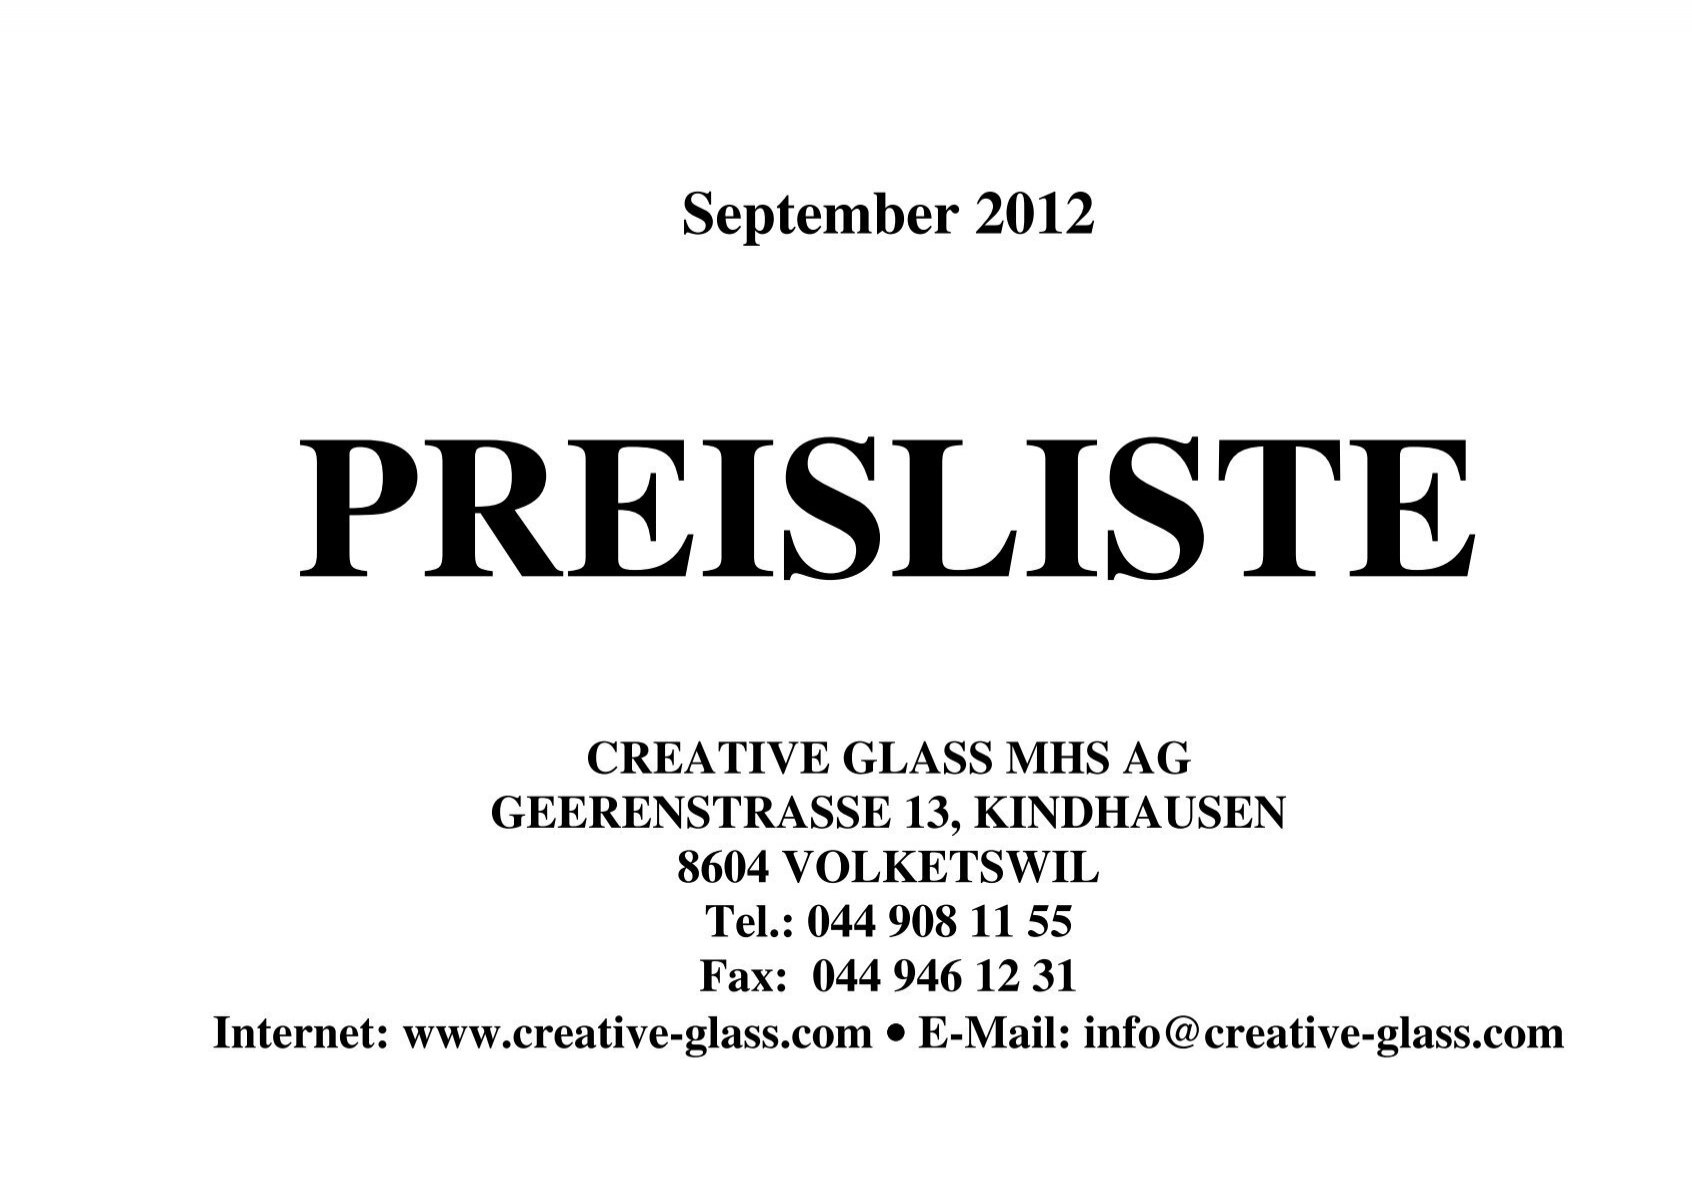 September 2012 - Creative Glass